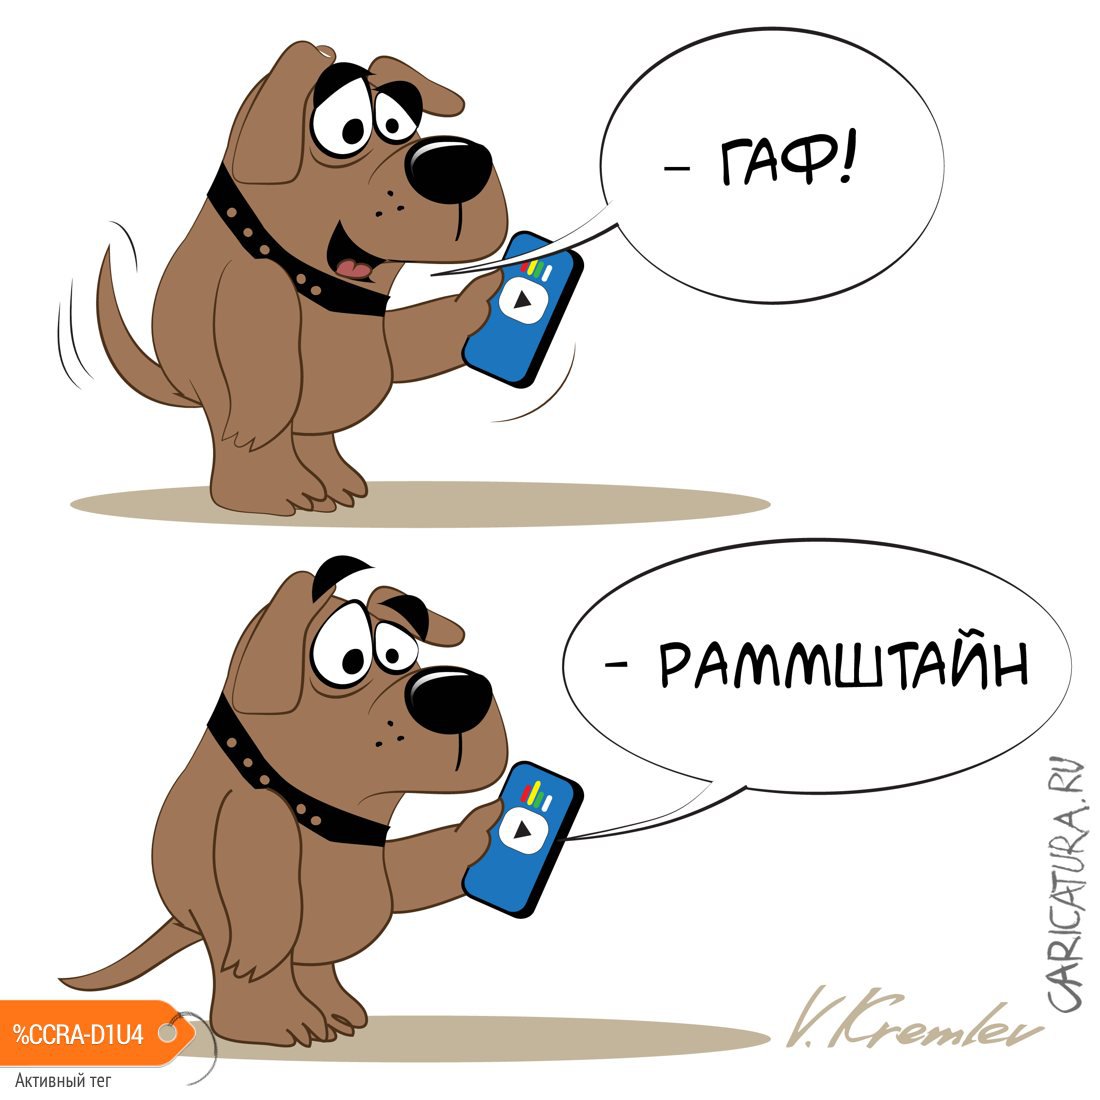 Карикатура "Гаф", Владимир Кремлёв